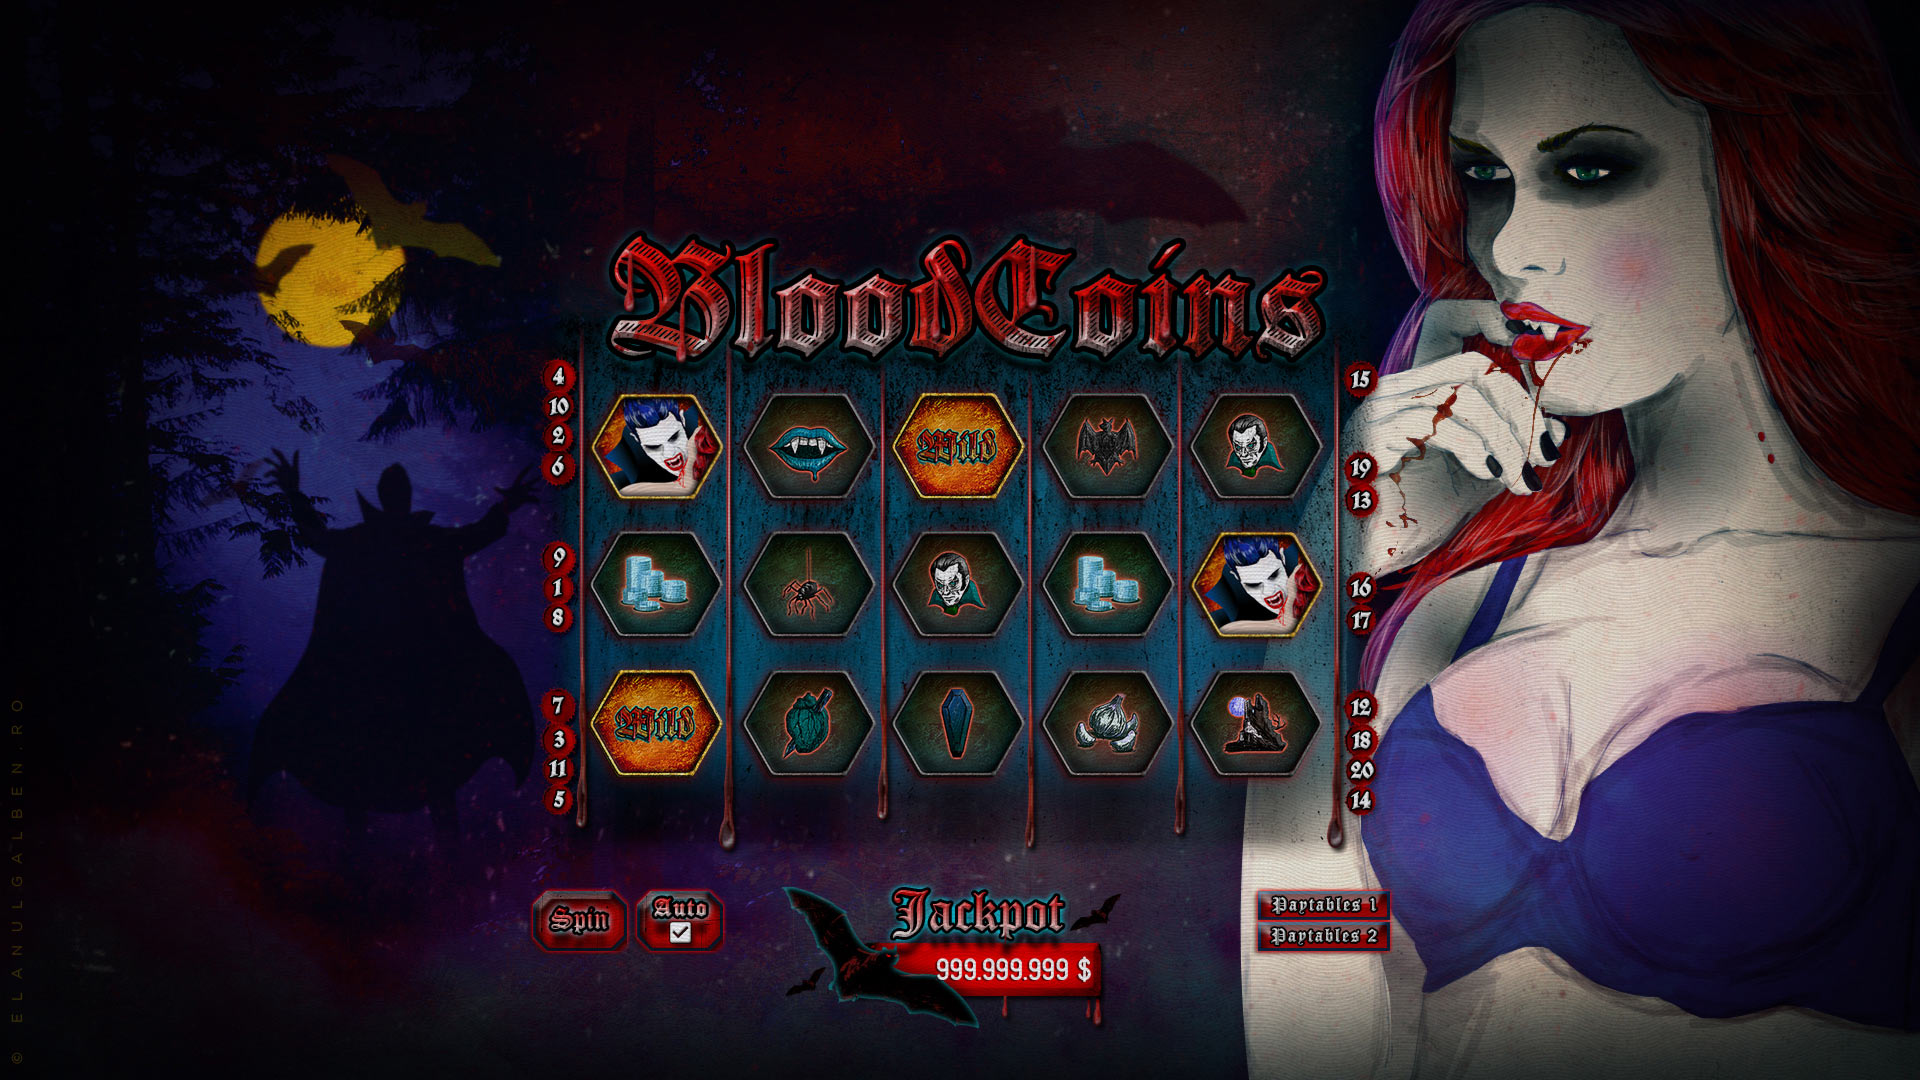 Online Casino Game Design - Slot machine game - Vampire Blood Coins